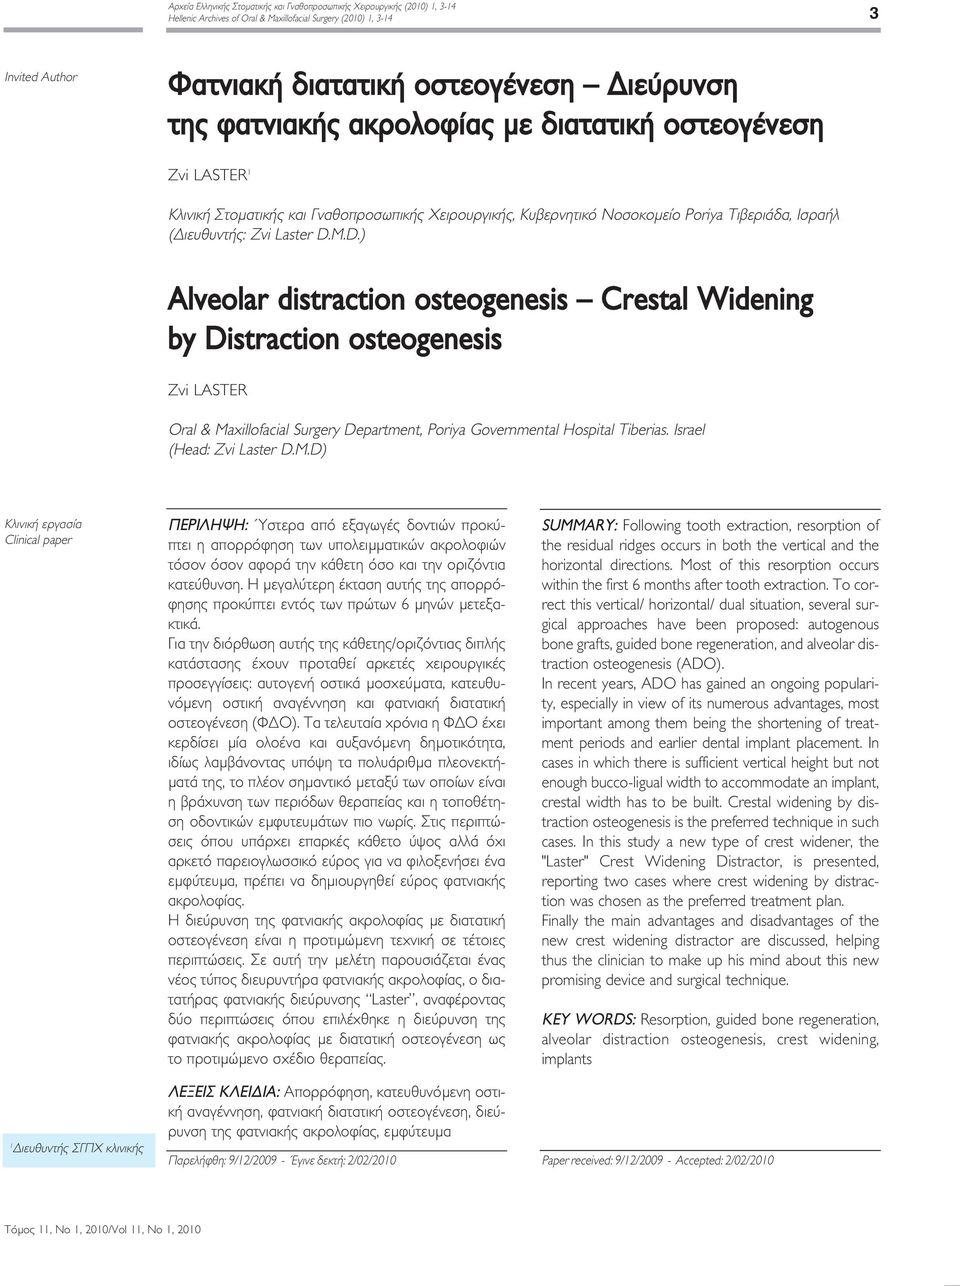 M.D.) Alveolar distraction osteogenesis Crestal Widening by Distraction osteogenesis Zvi LASTER Oral & Maxillofacial Surgery Department, Poriya Governmental Hospital Tiberias.